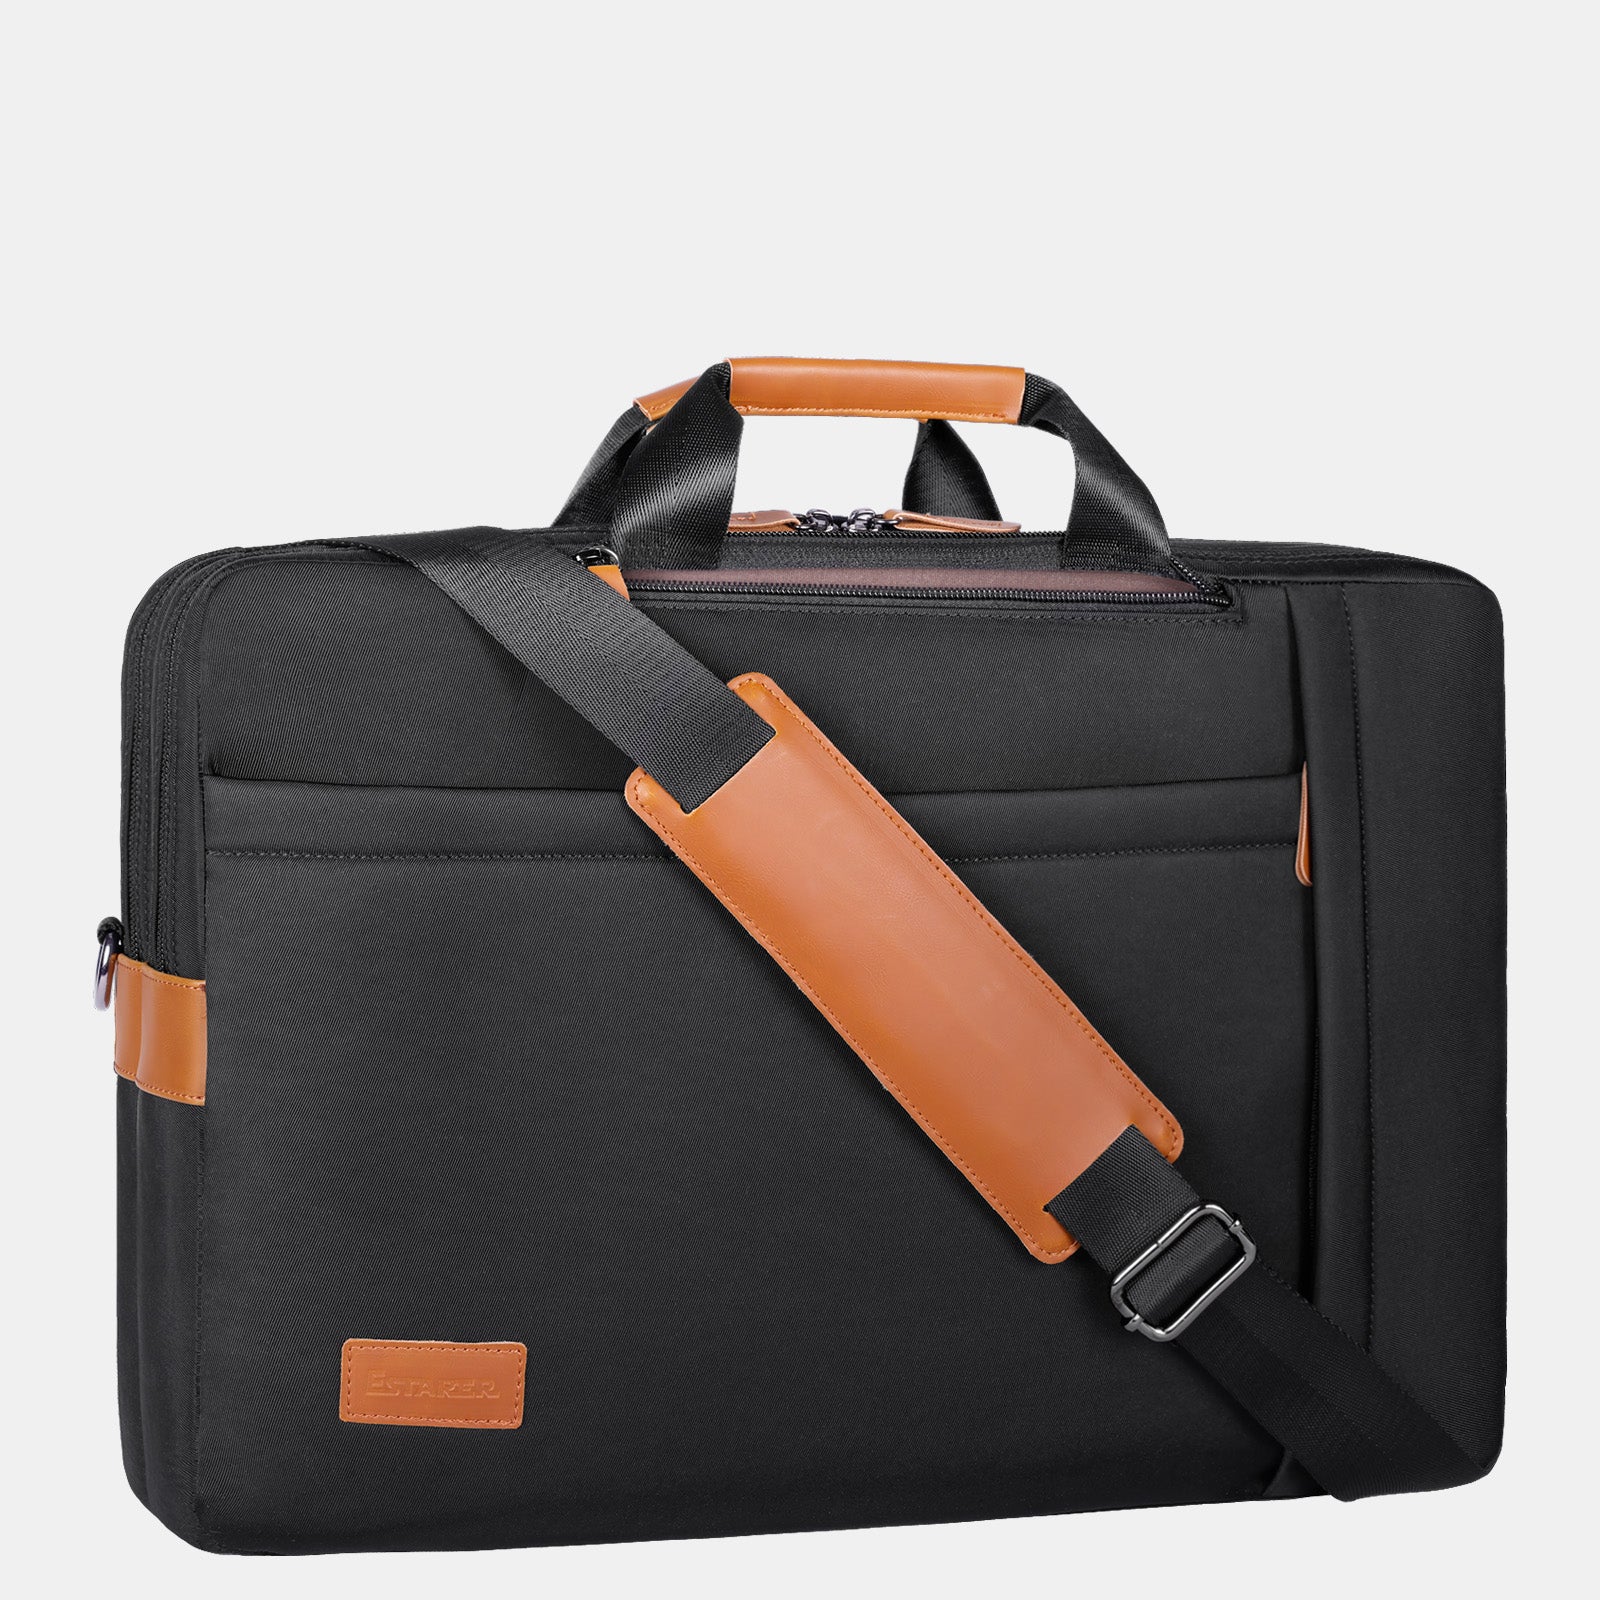 Estarer Laptop Backpack Briefcase 3Way Nylon